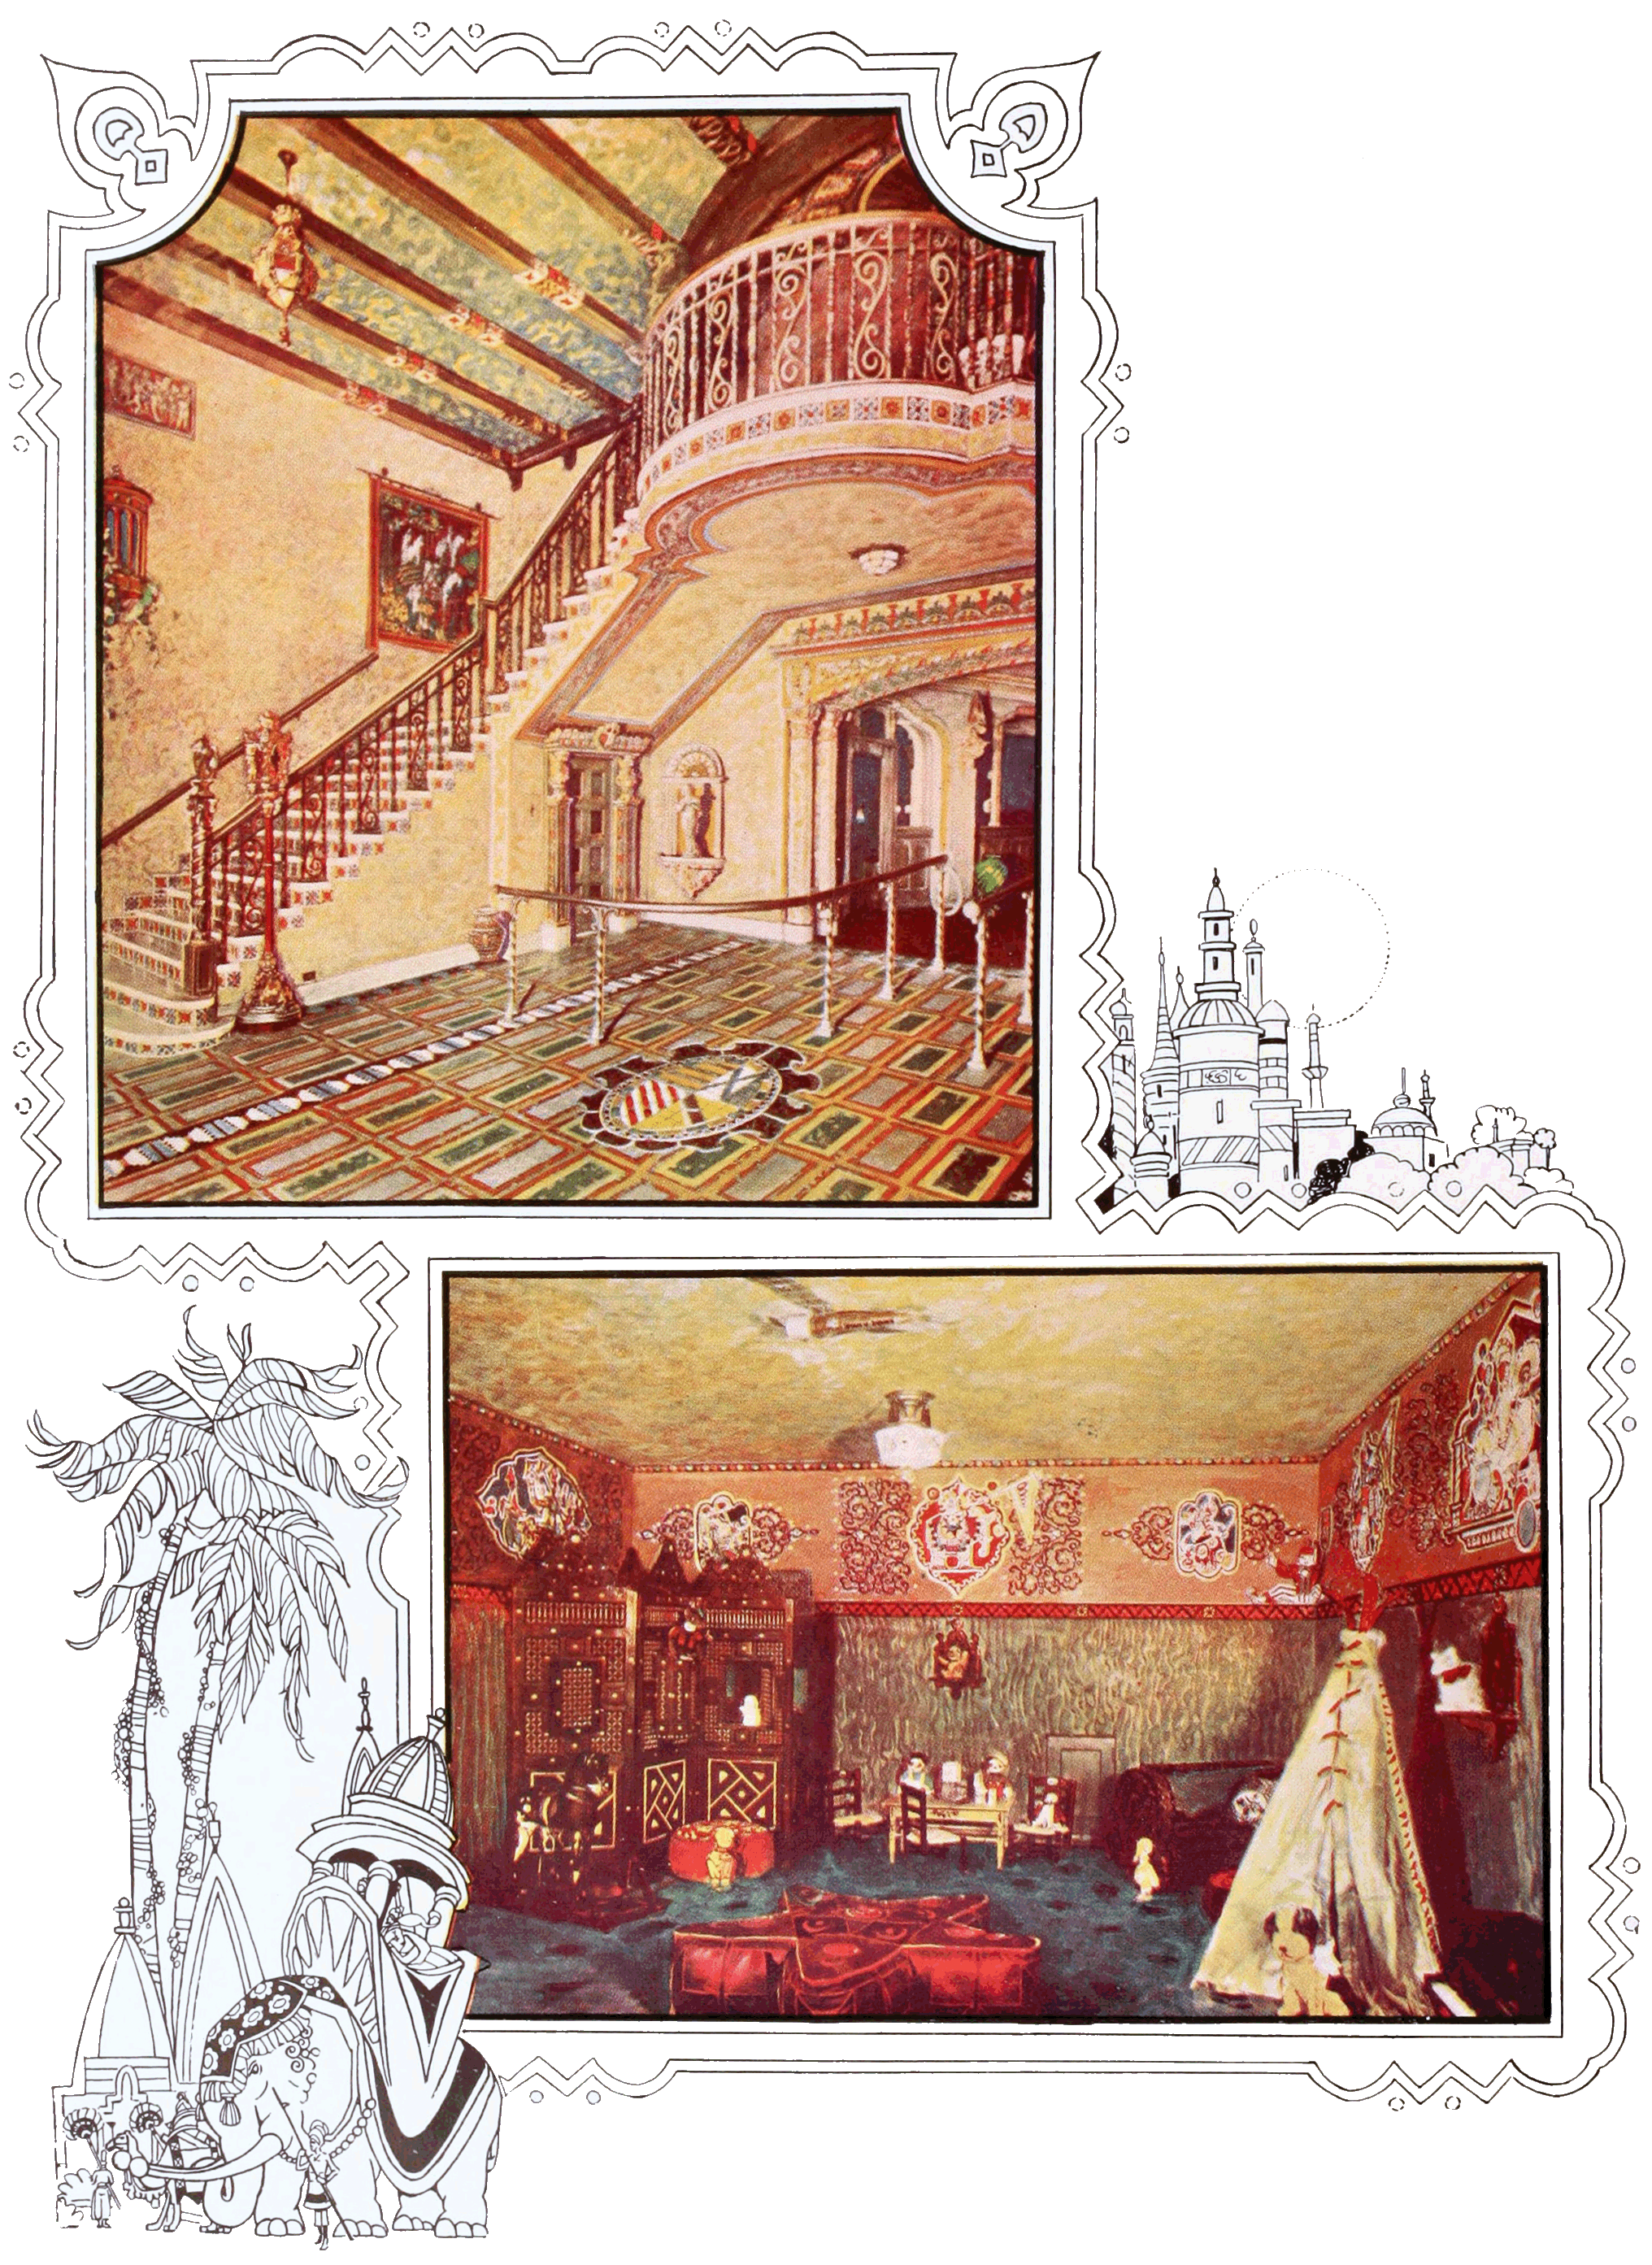 Lobby Stairway (top); A Playroom (bottom)